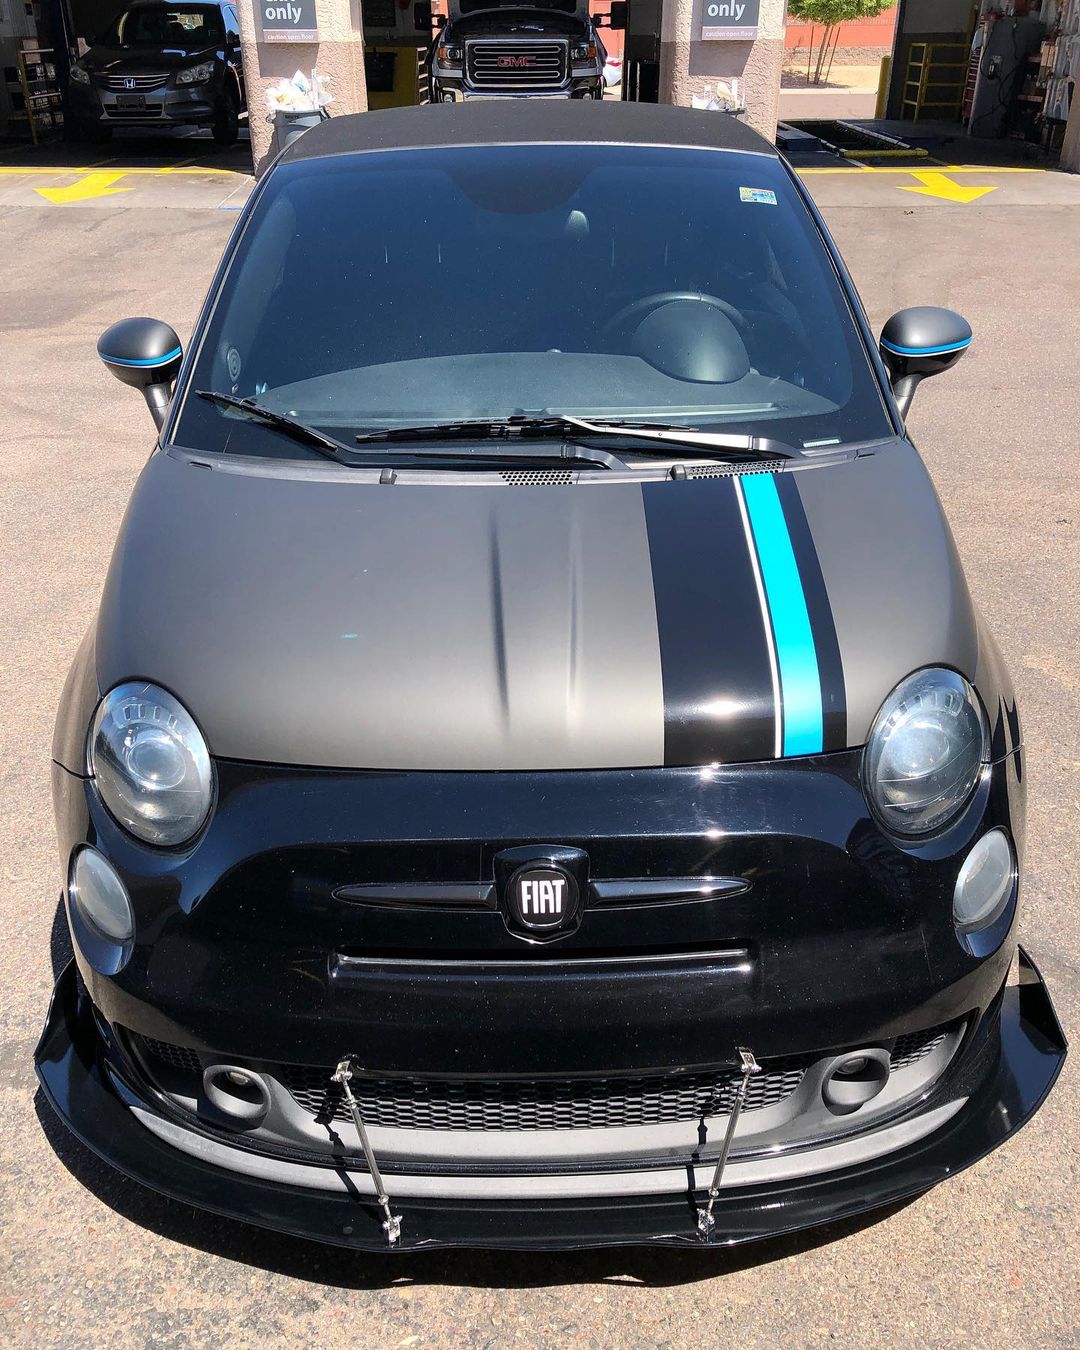 Matte black hood wrap on Fiat Abarth, stripes.